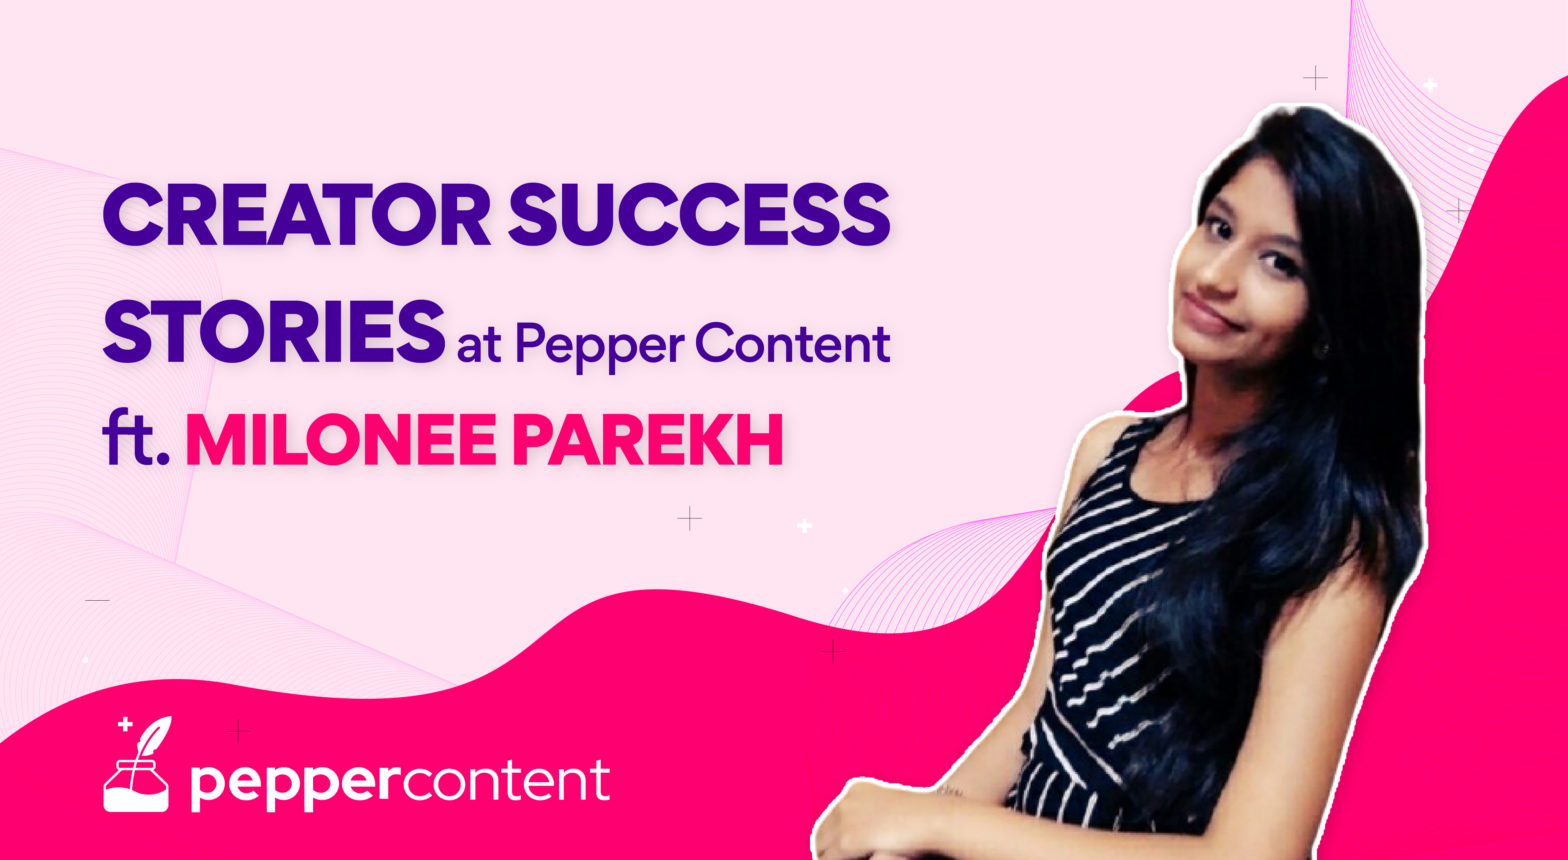 Creator Success Stories at Pepper Content: Milonee Parekh